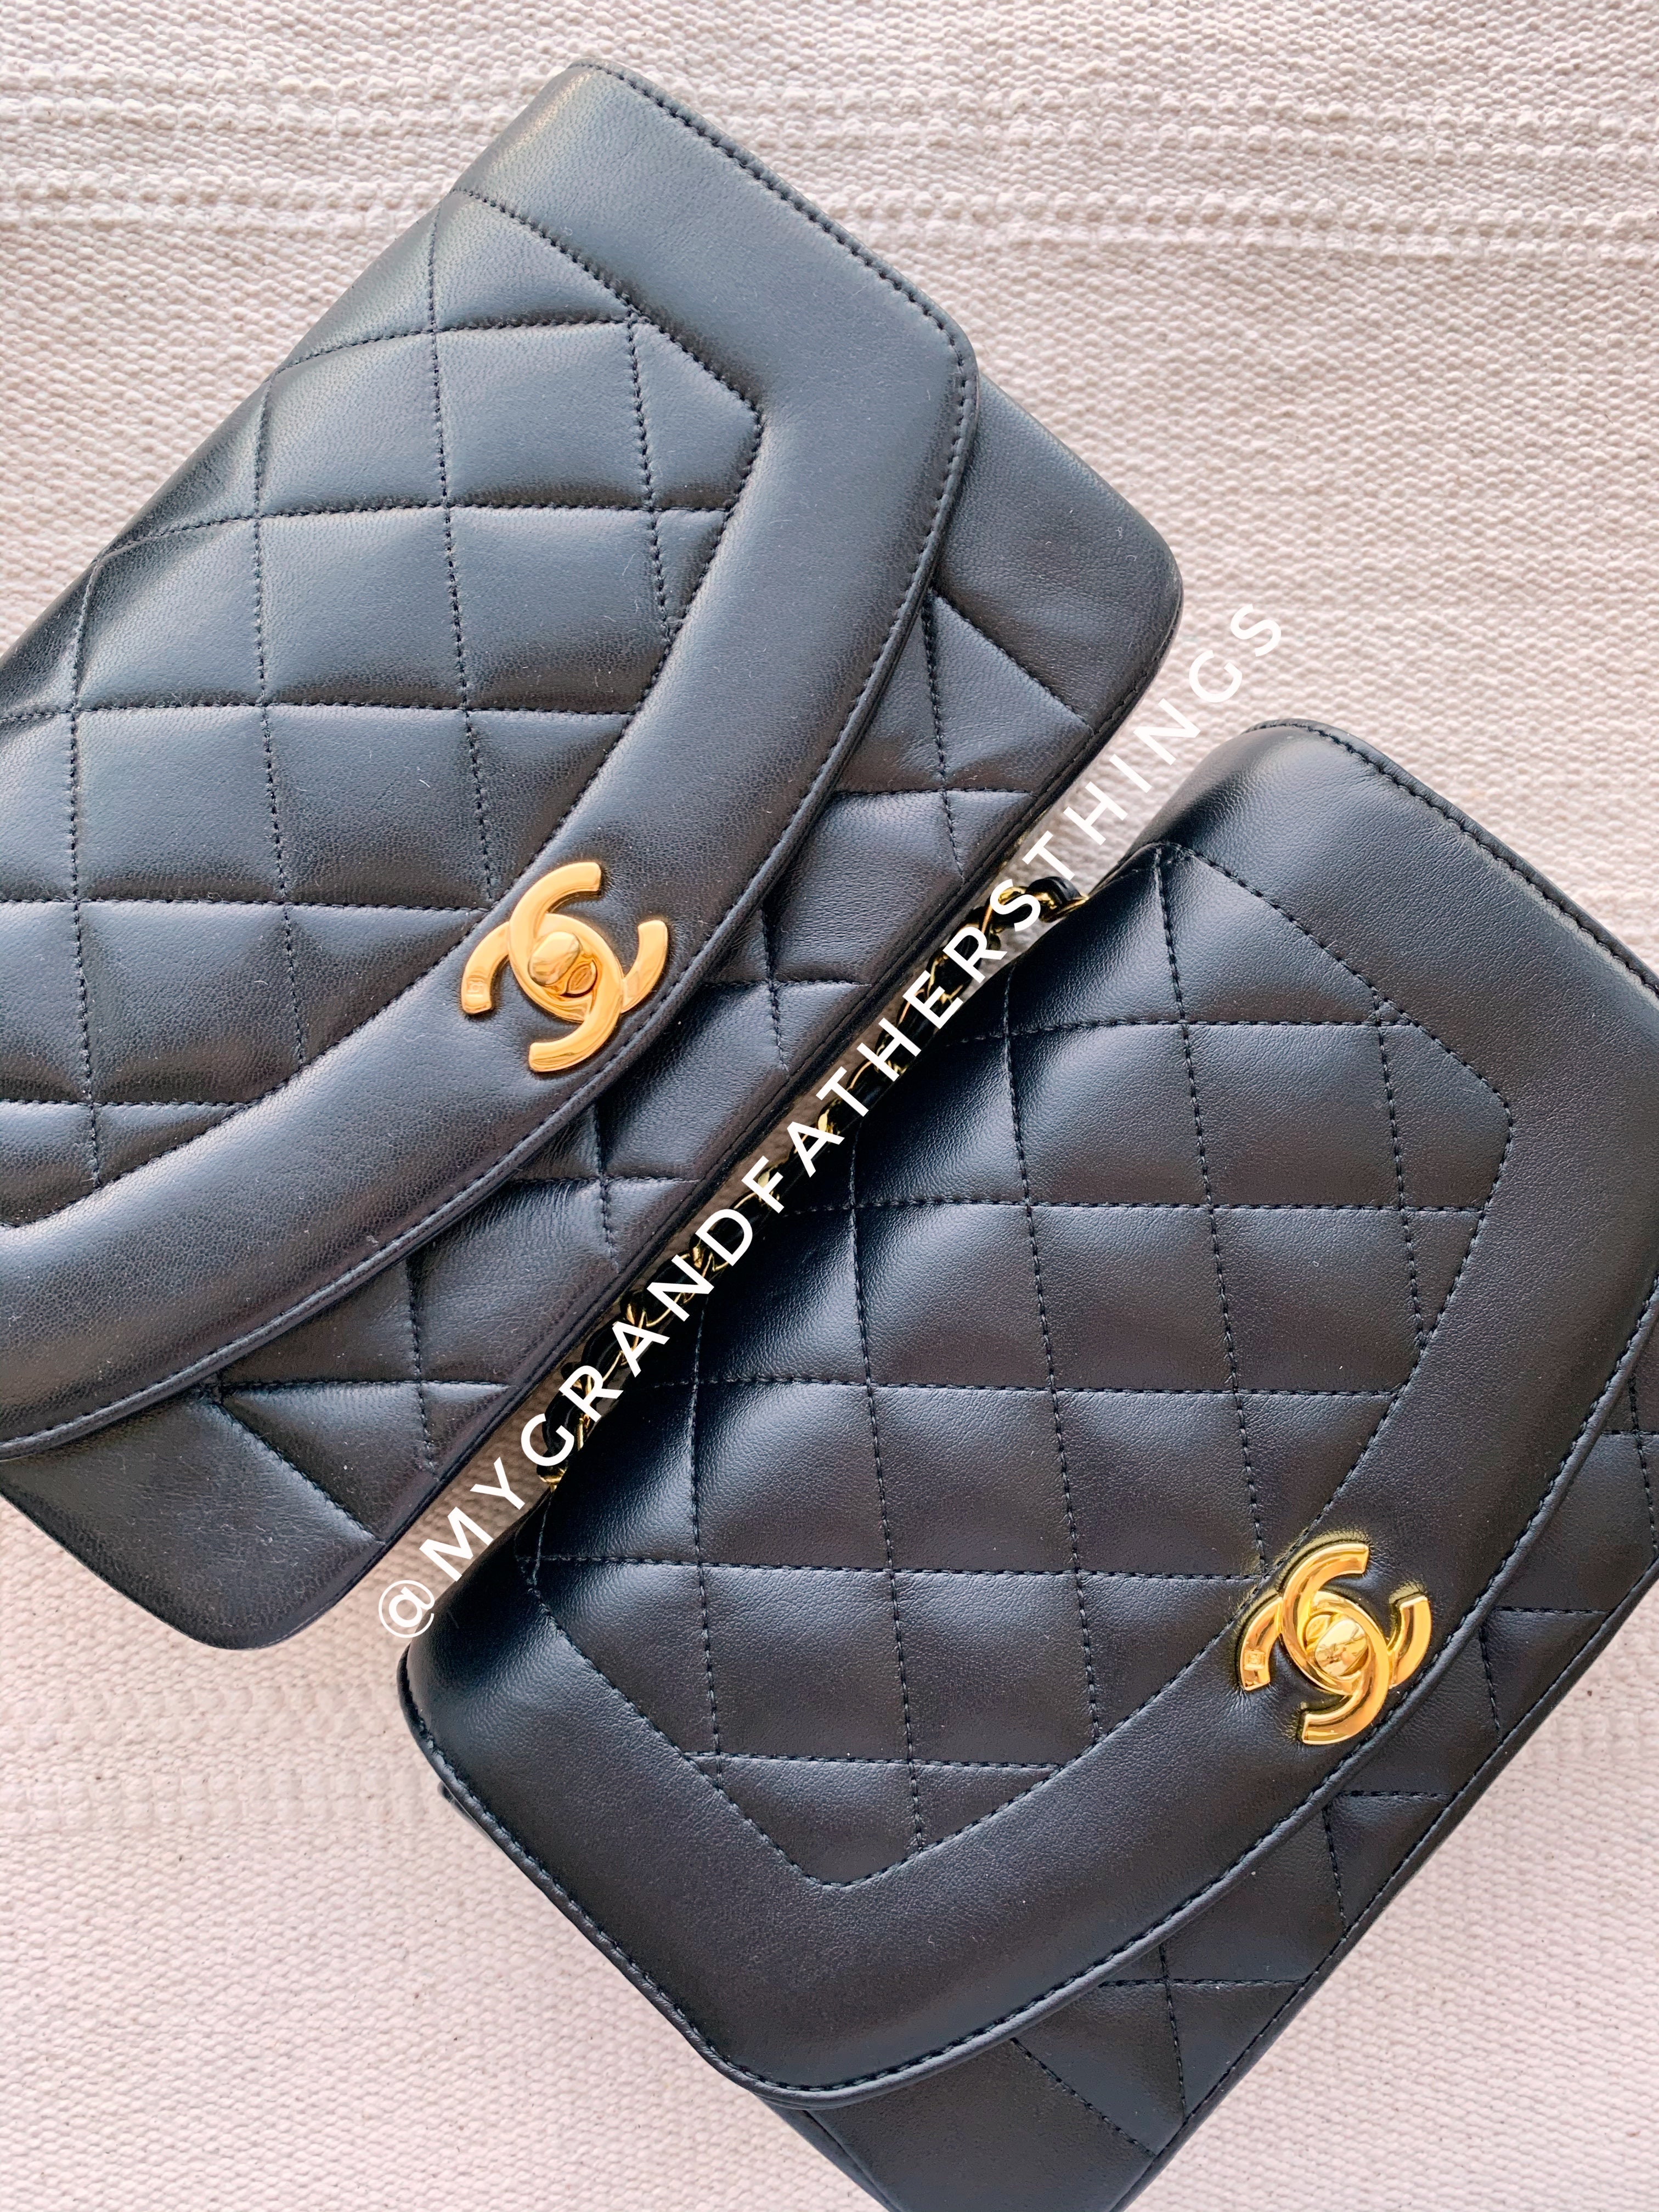 Premium Dior replica bags - High-bags